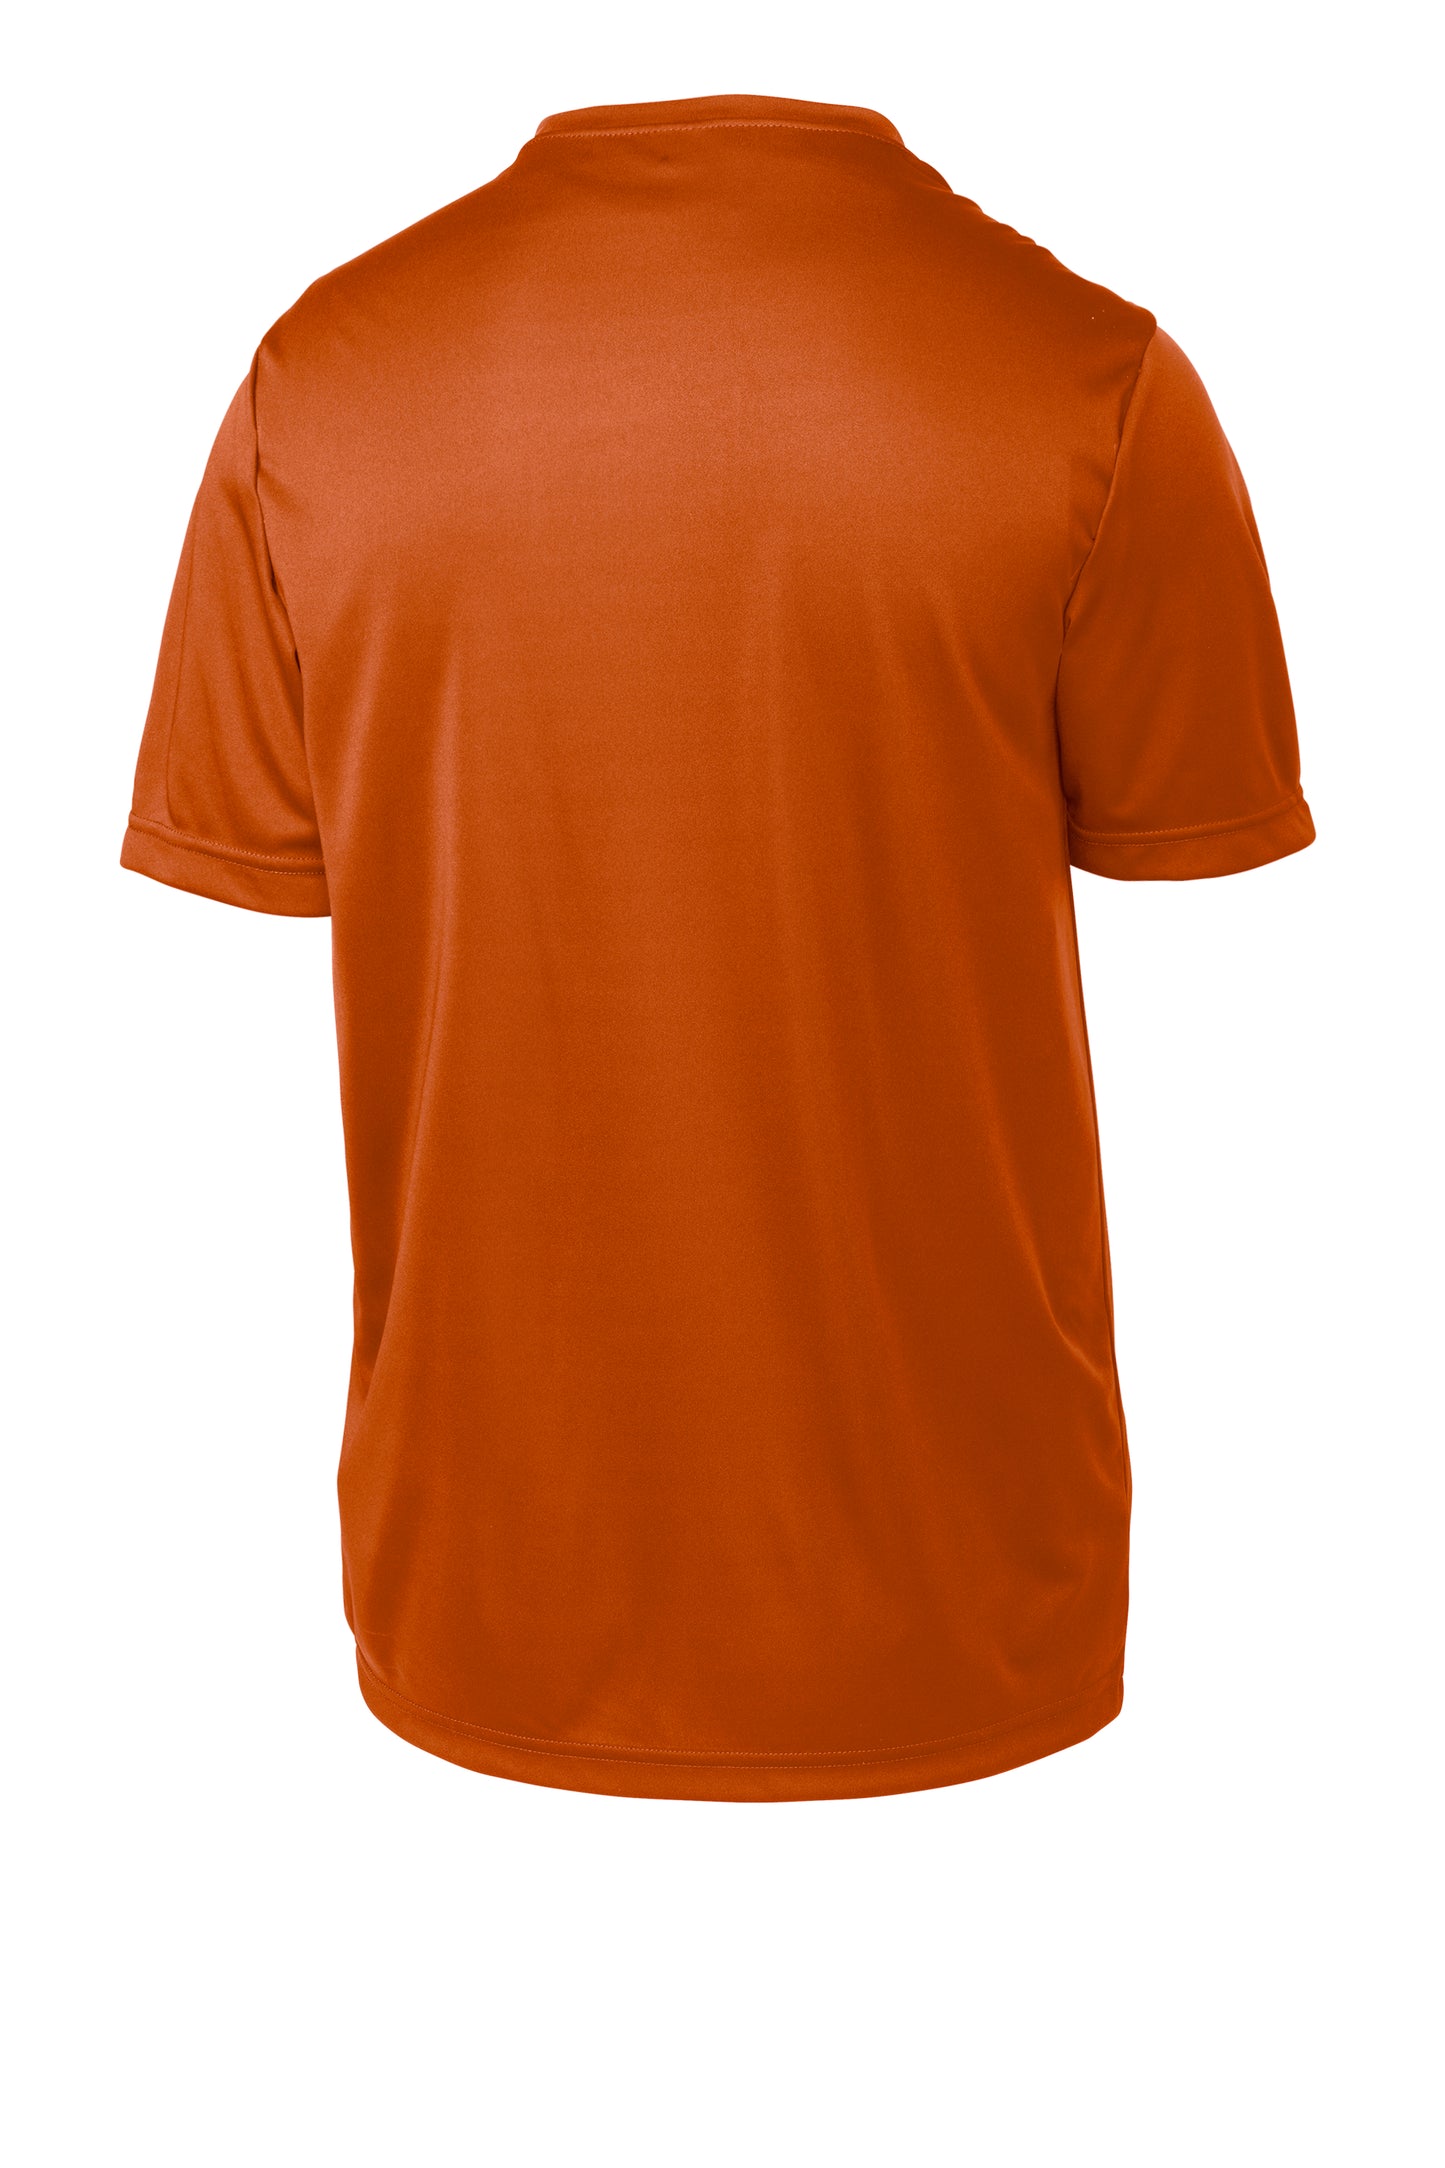 Sport-Tek® Youth Short Sleeve - Texas Orange